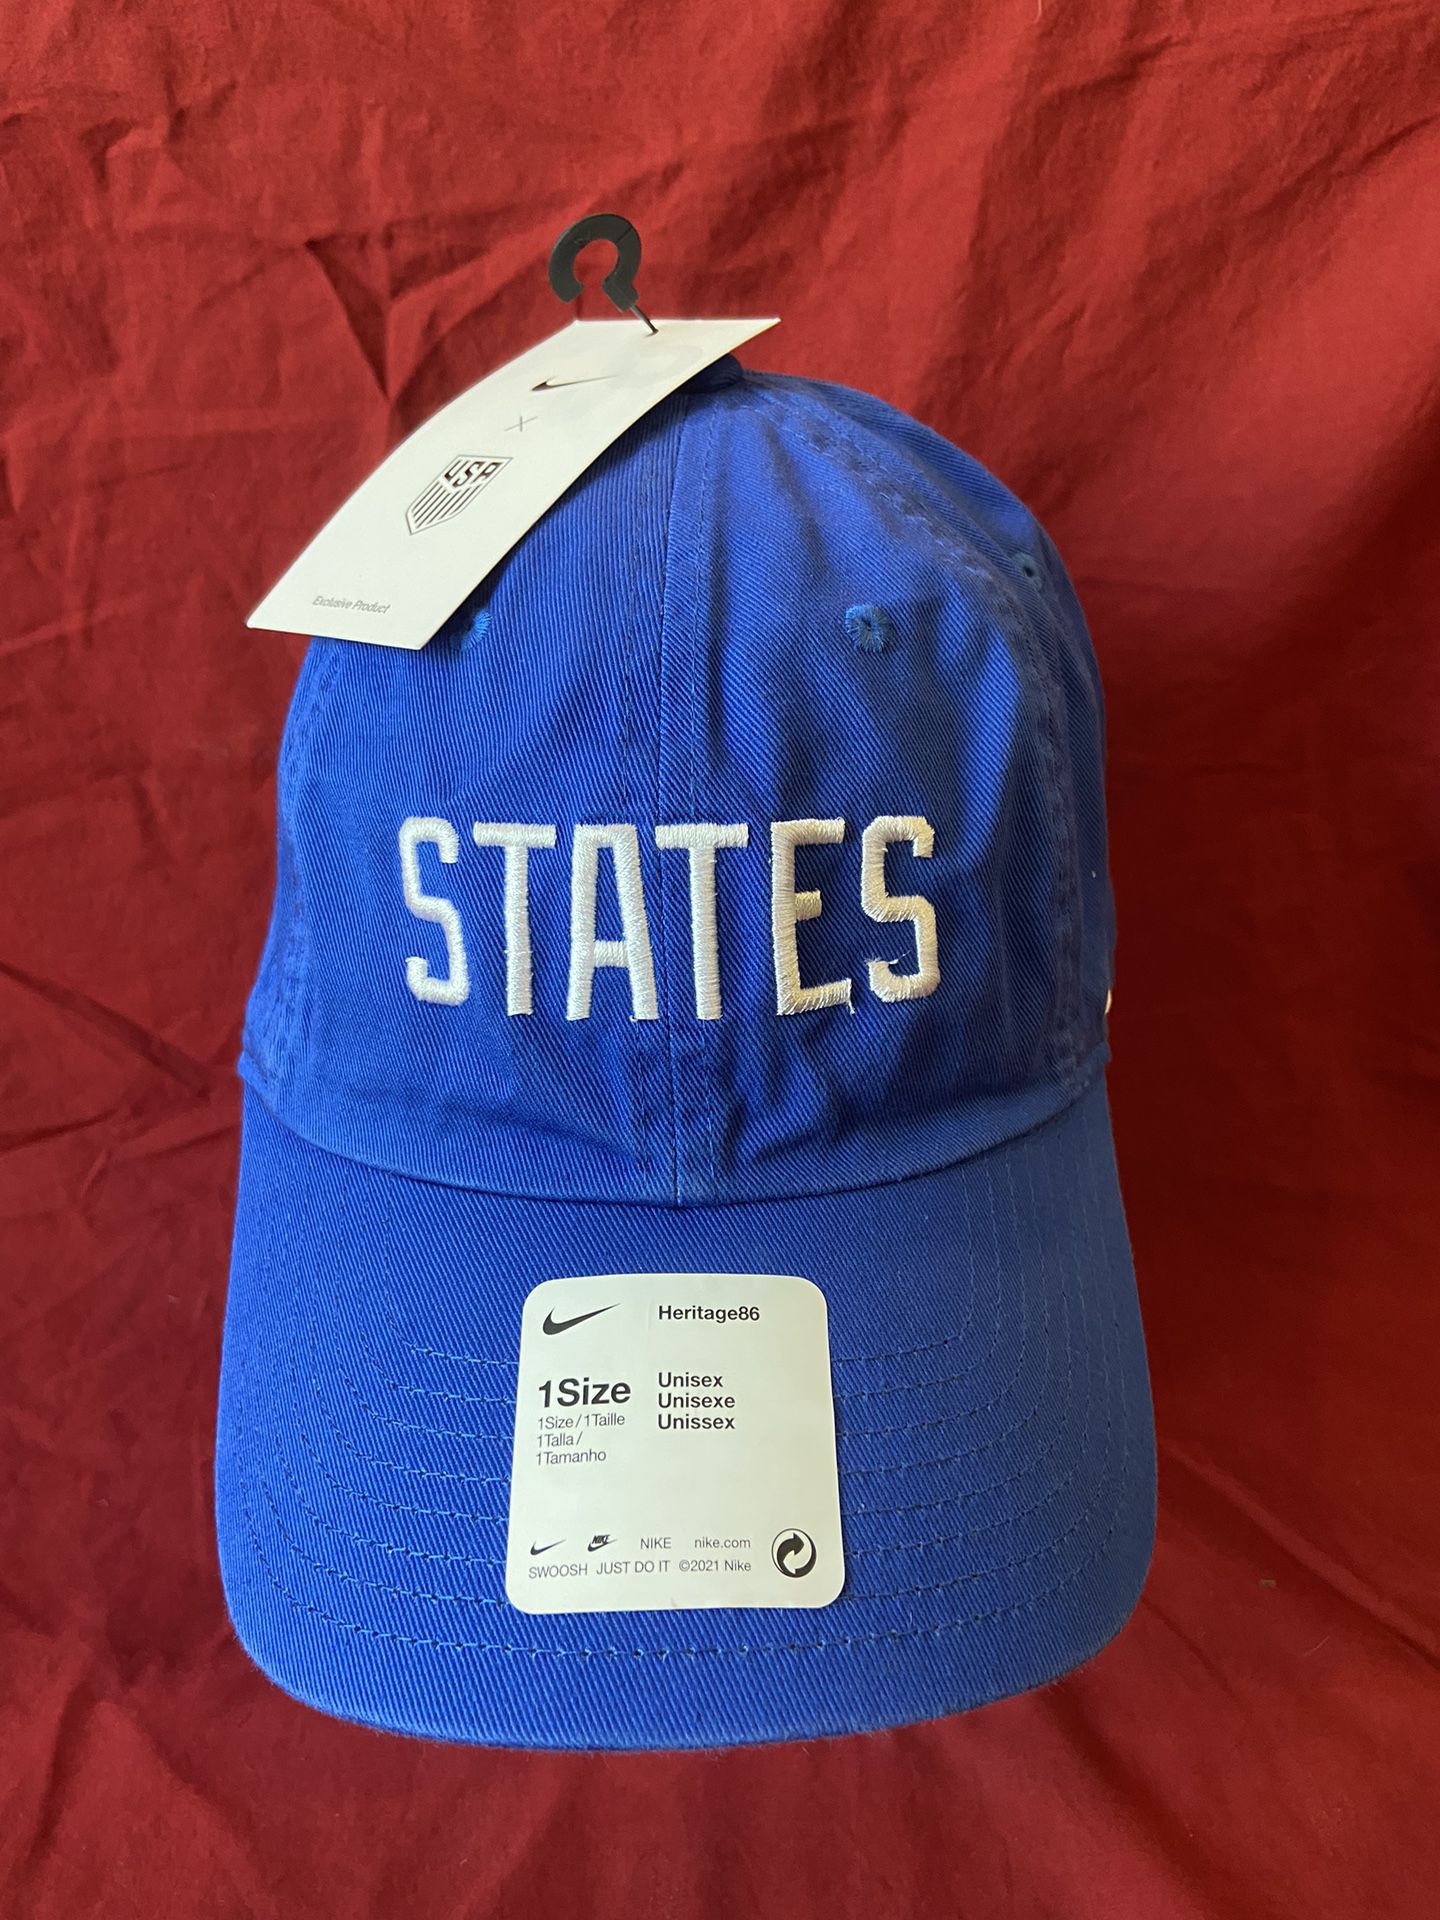 NEW USMNT Unisex Campus Crest State Nike Dri-Fit Adjustable Hat Blue